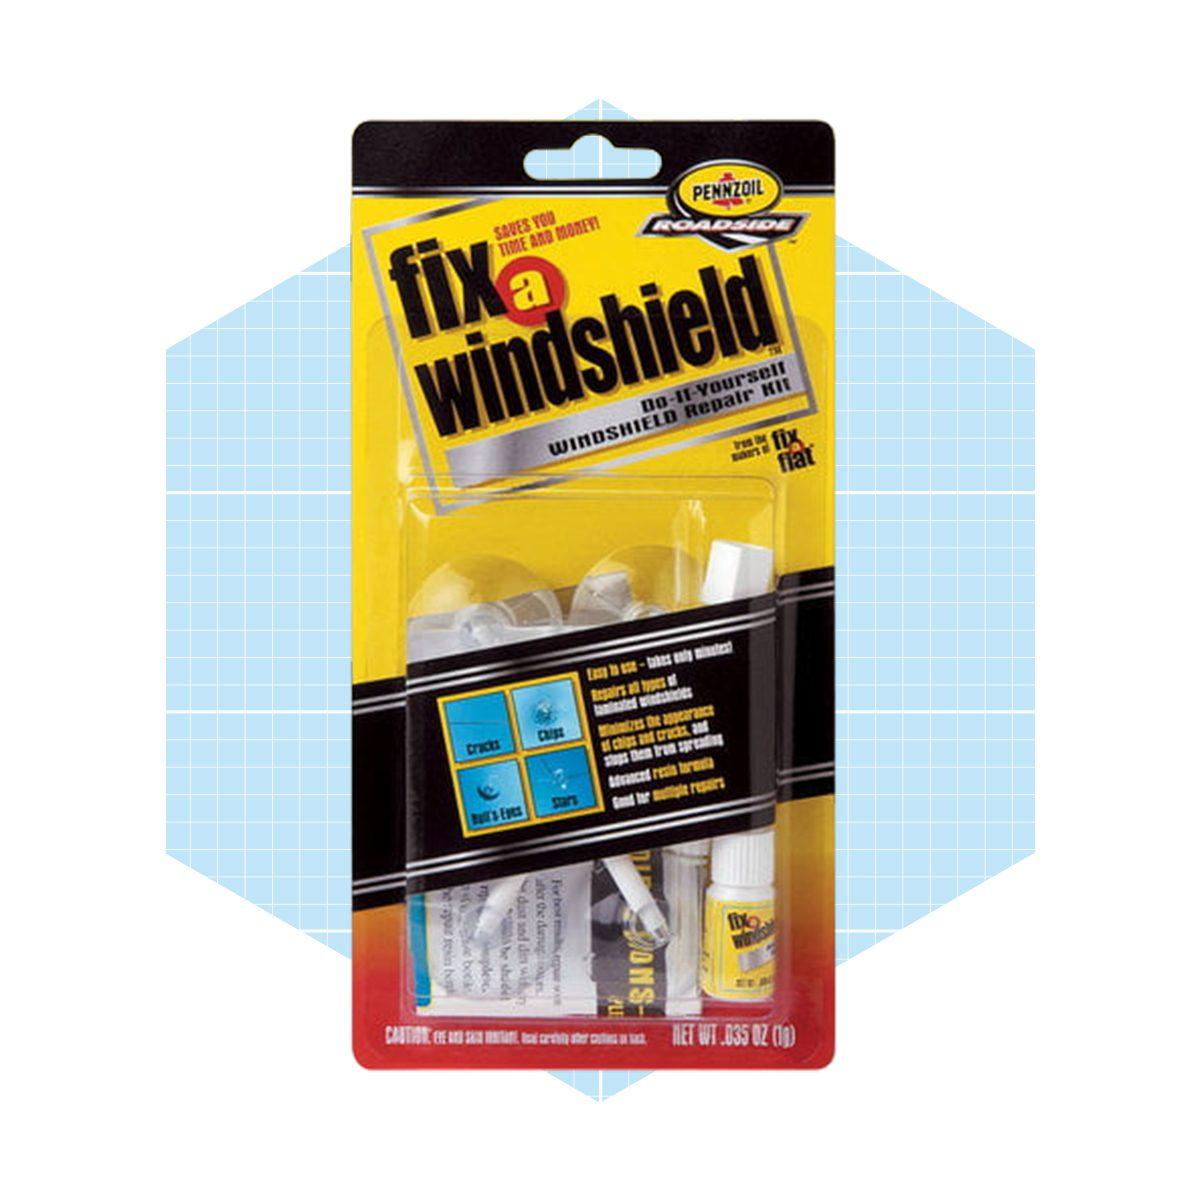 Windshield Repair Kit, Cracked Glass Repair Kit, Windshield Scratch  Remover, Window Screen Repair Kit, Windshield Chip Repair Kit, Windshield  Repair Kit